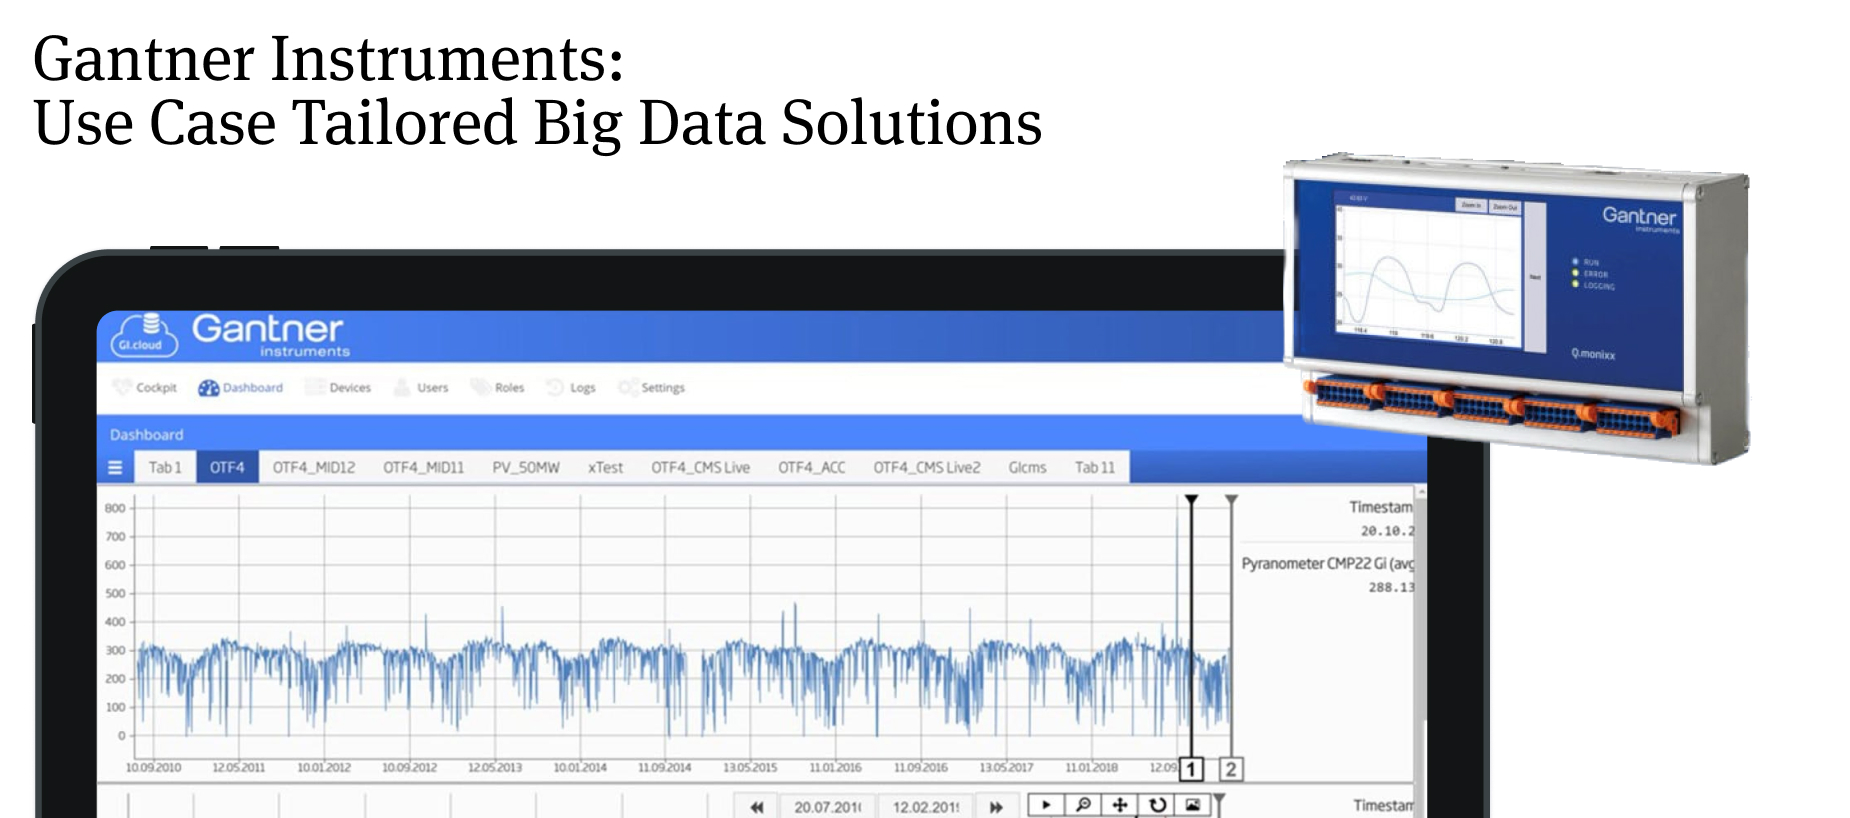 Gantner Instruments: Use Case Tailored Big Data Solutions